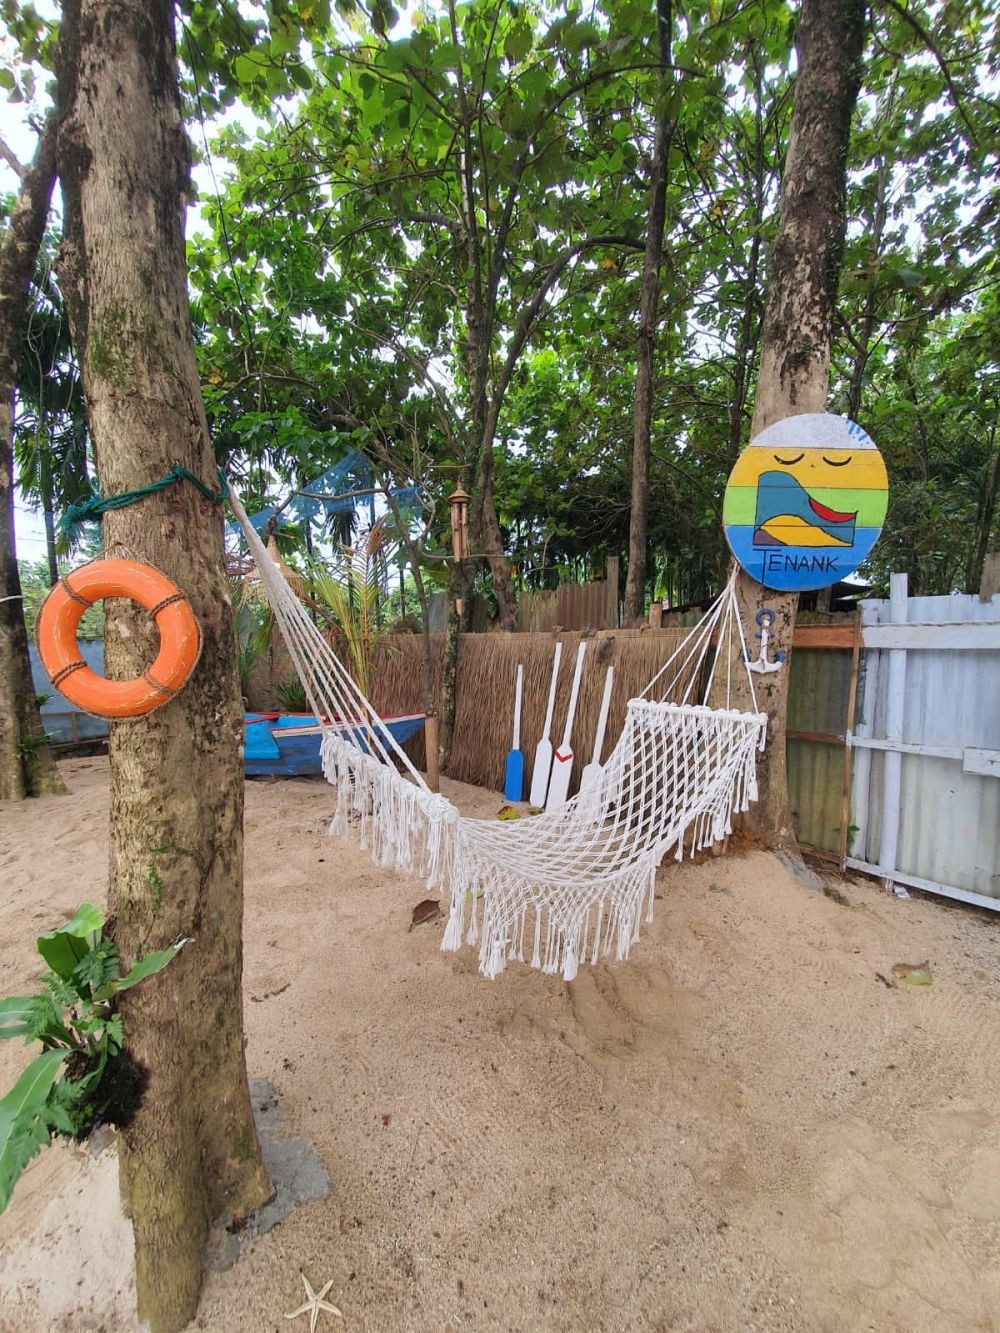 Healing di Kafe Tenank Berkonsep Pantai, Pasir Asli dari Bali